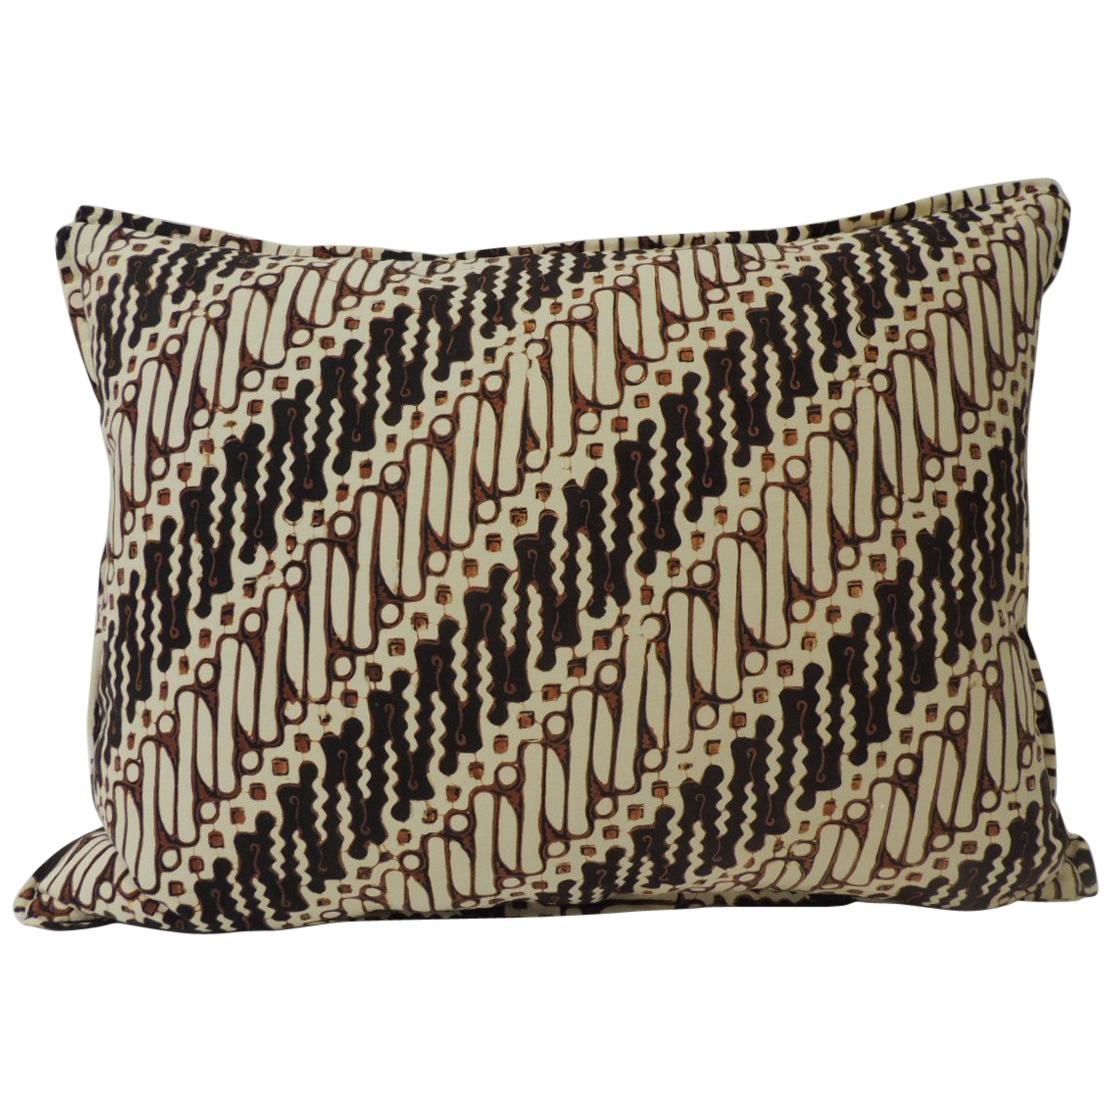 Vintage Brown and Black Batik Decorative Bolsters Pillow